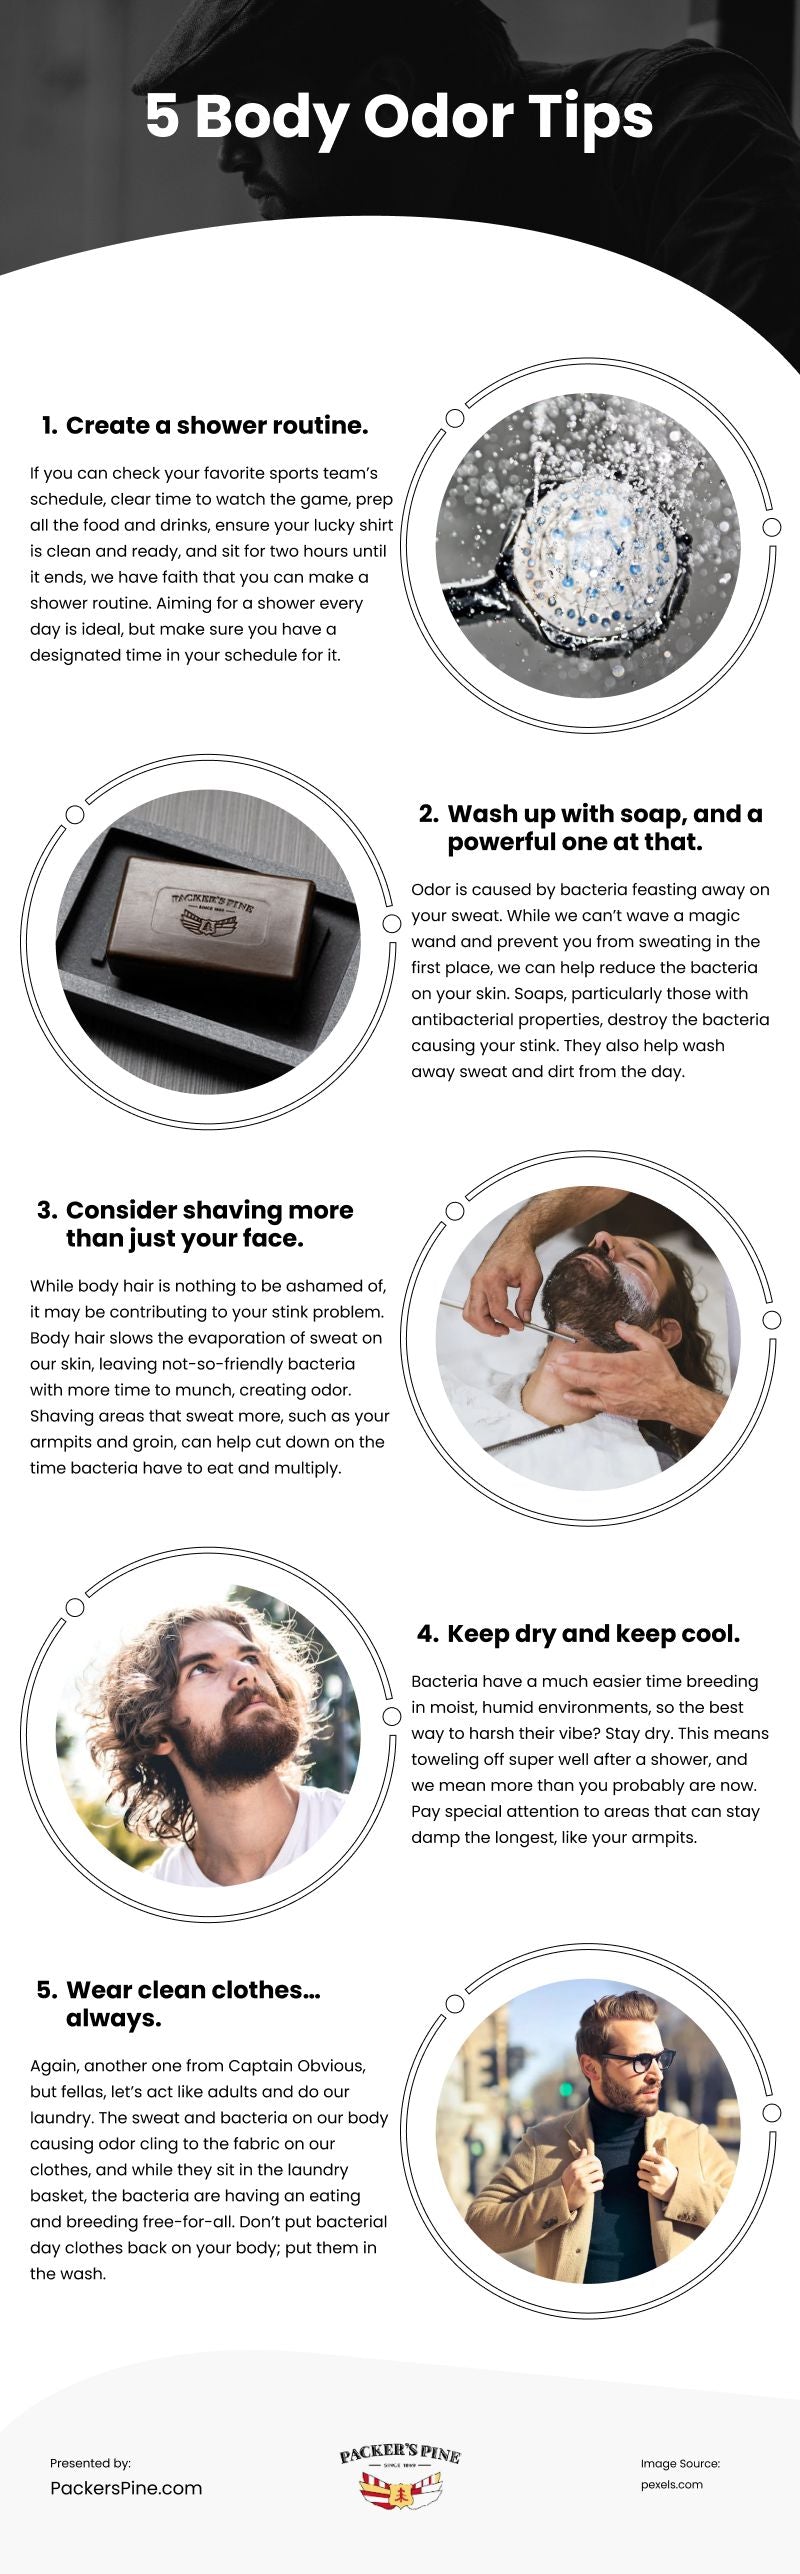 5 Body Odor Tips Infographic